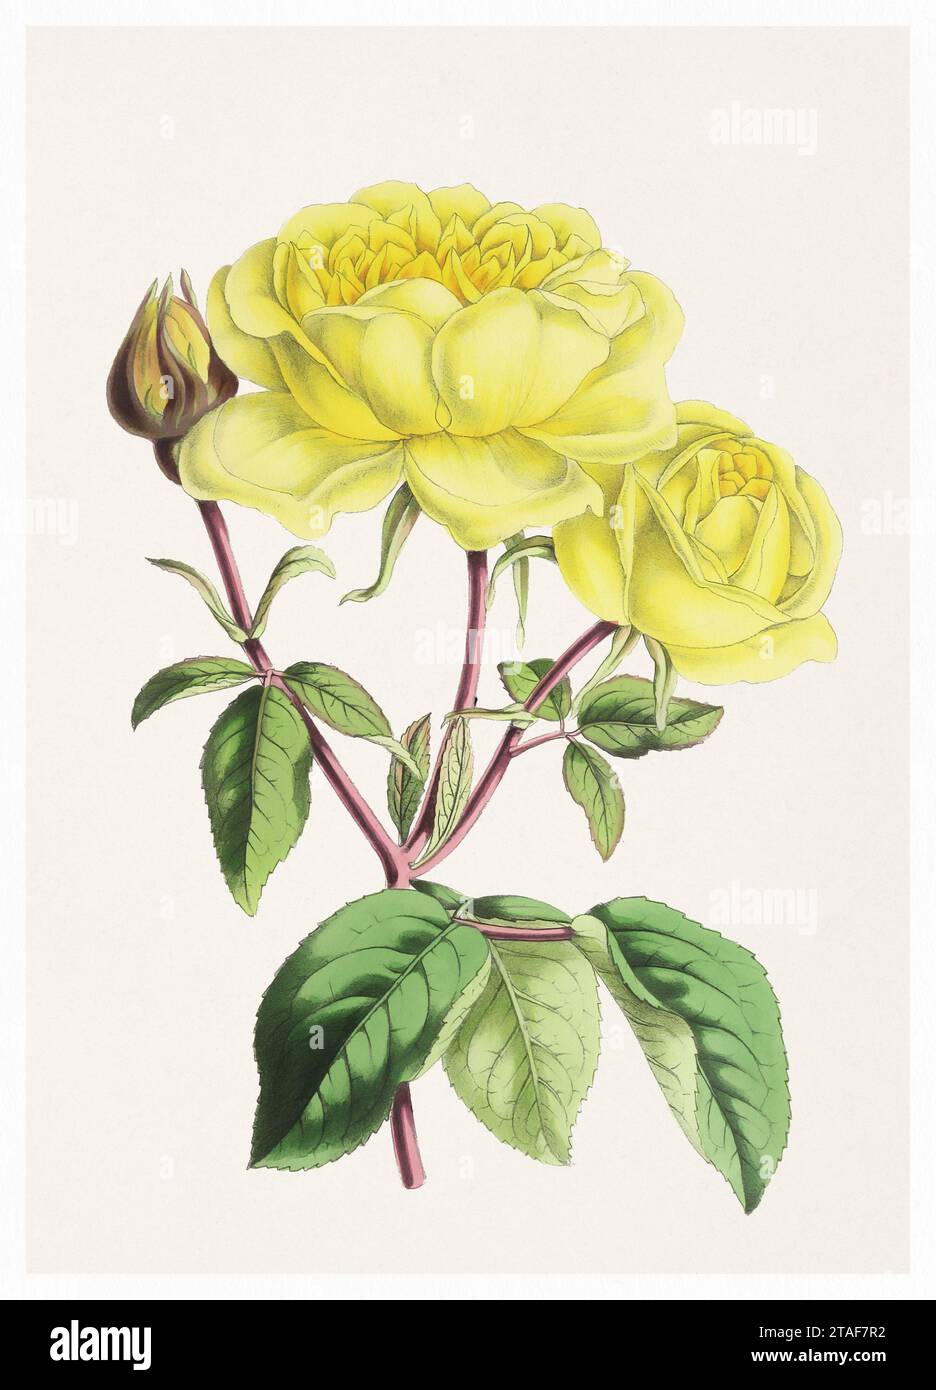 Rose Flower. Digital vintage-style flower illustration on a textured beige background. Stock Photo